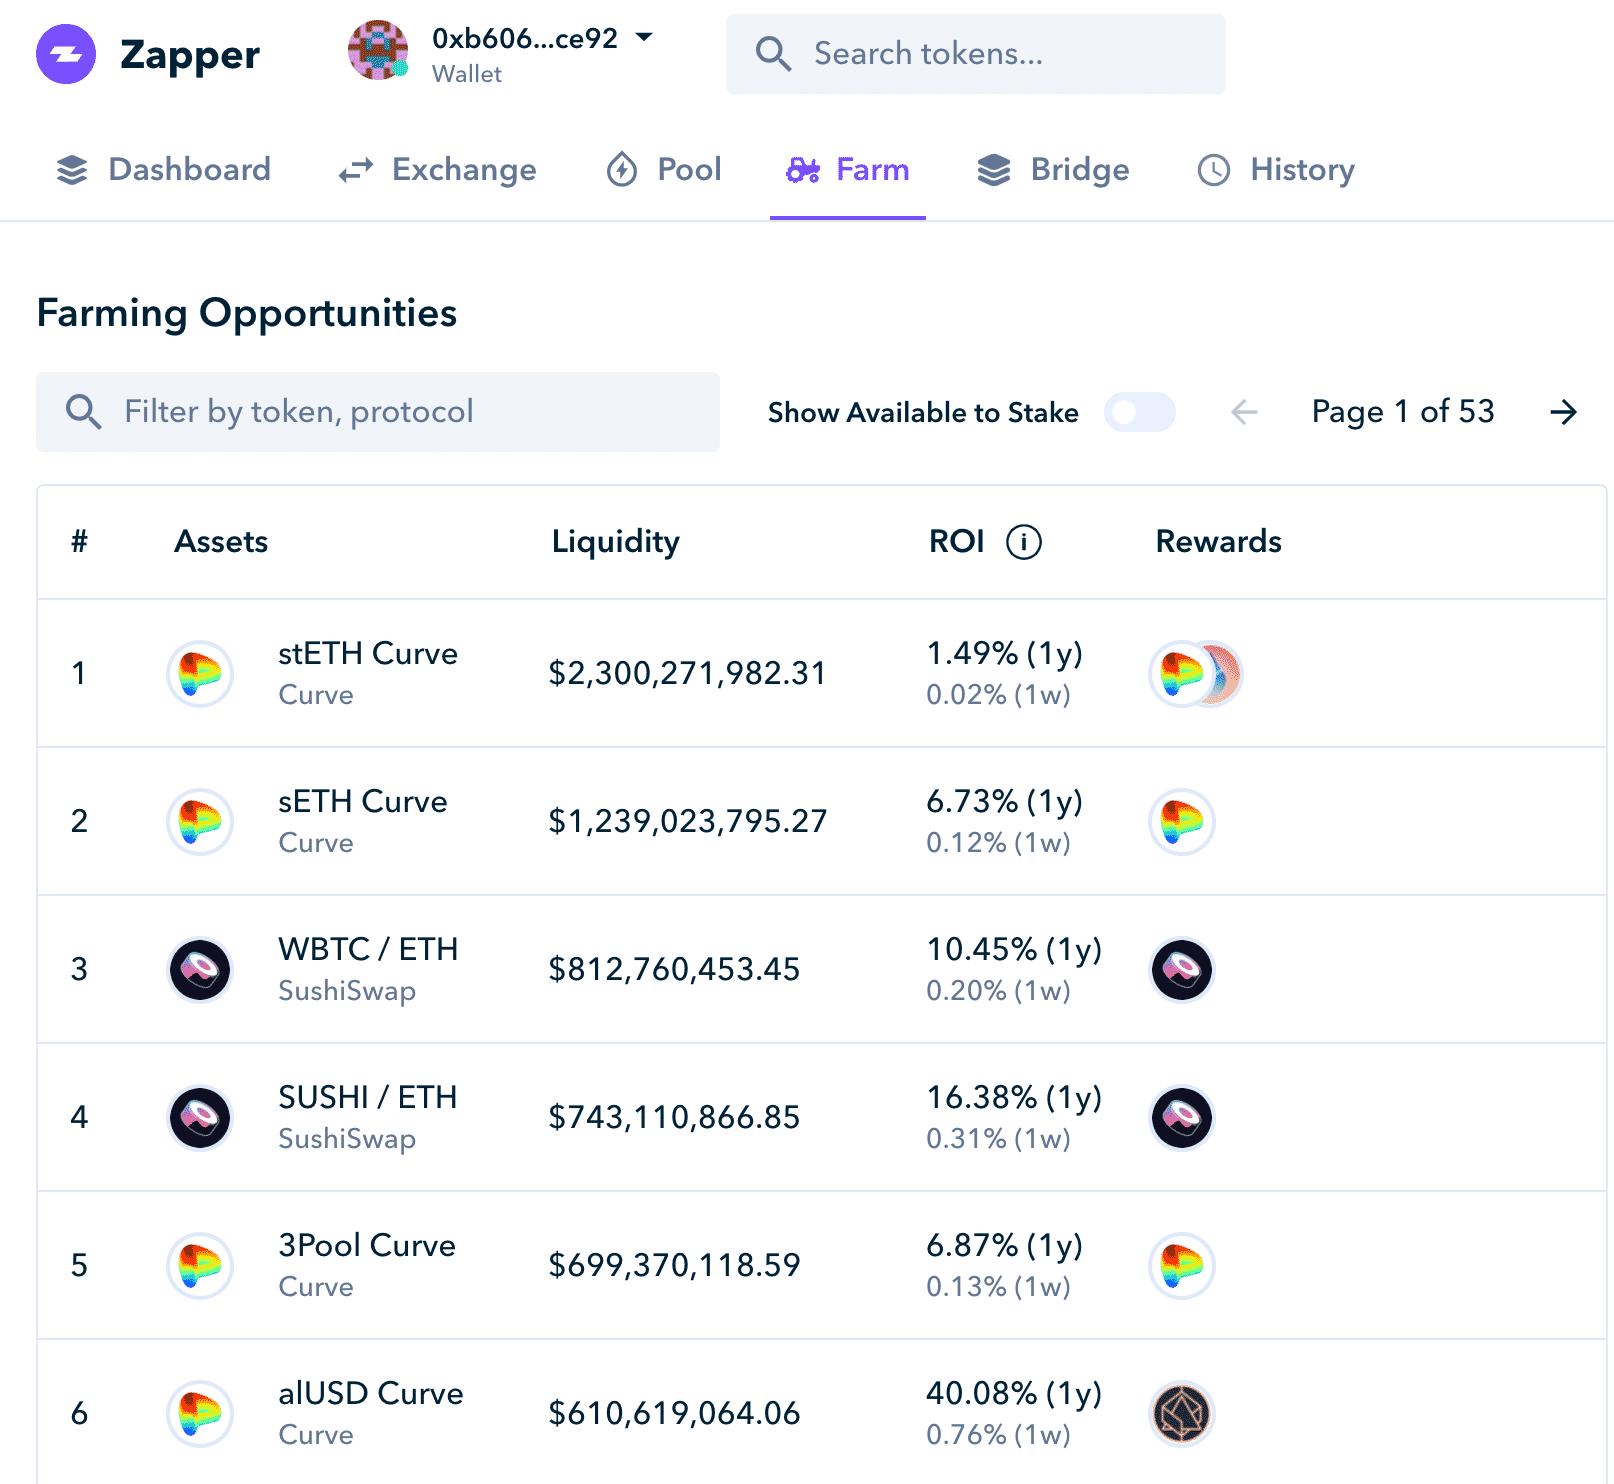 UI ของ Zapper